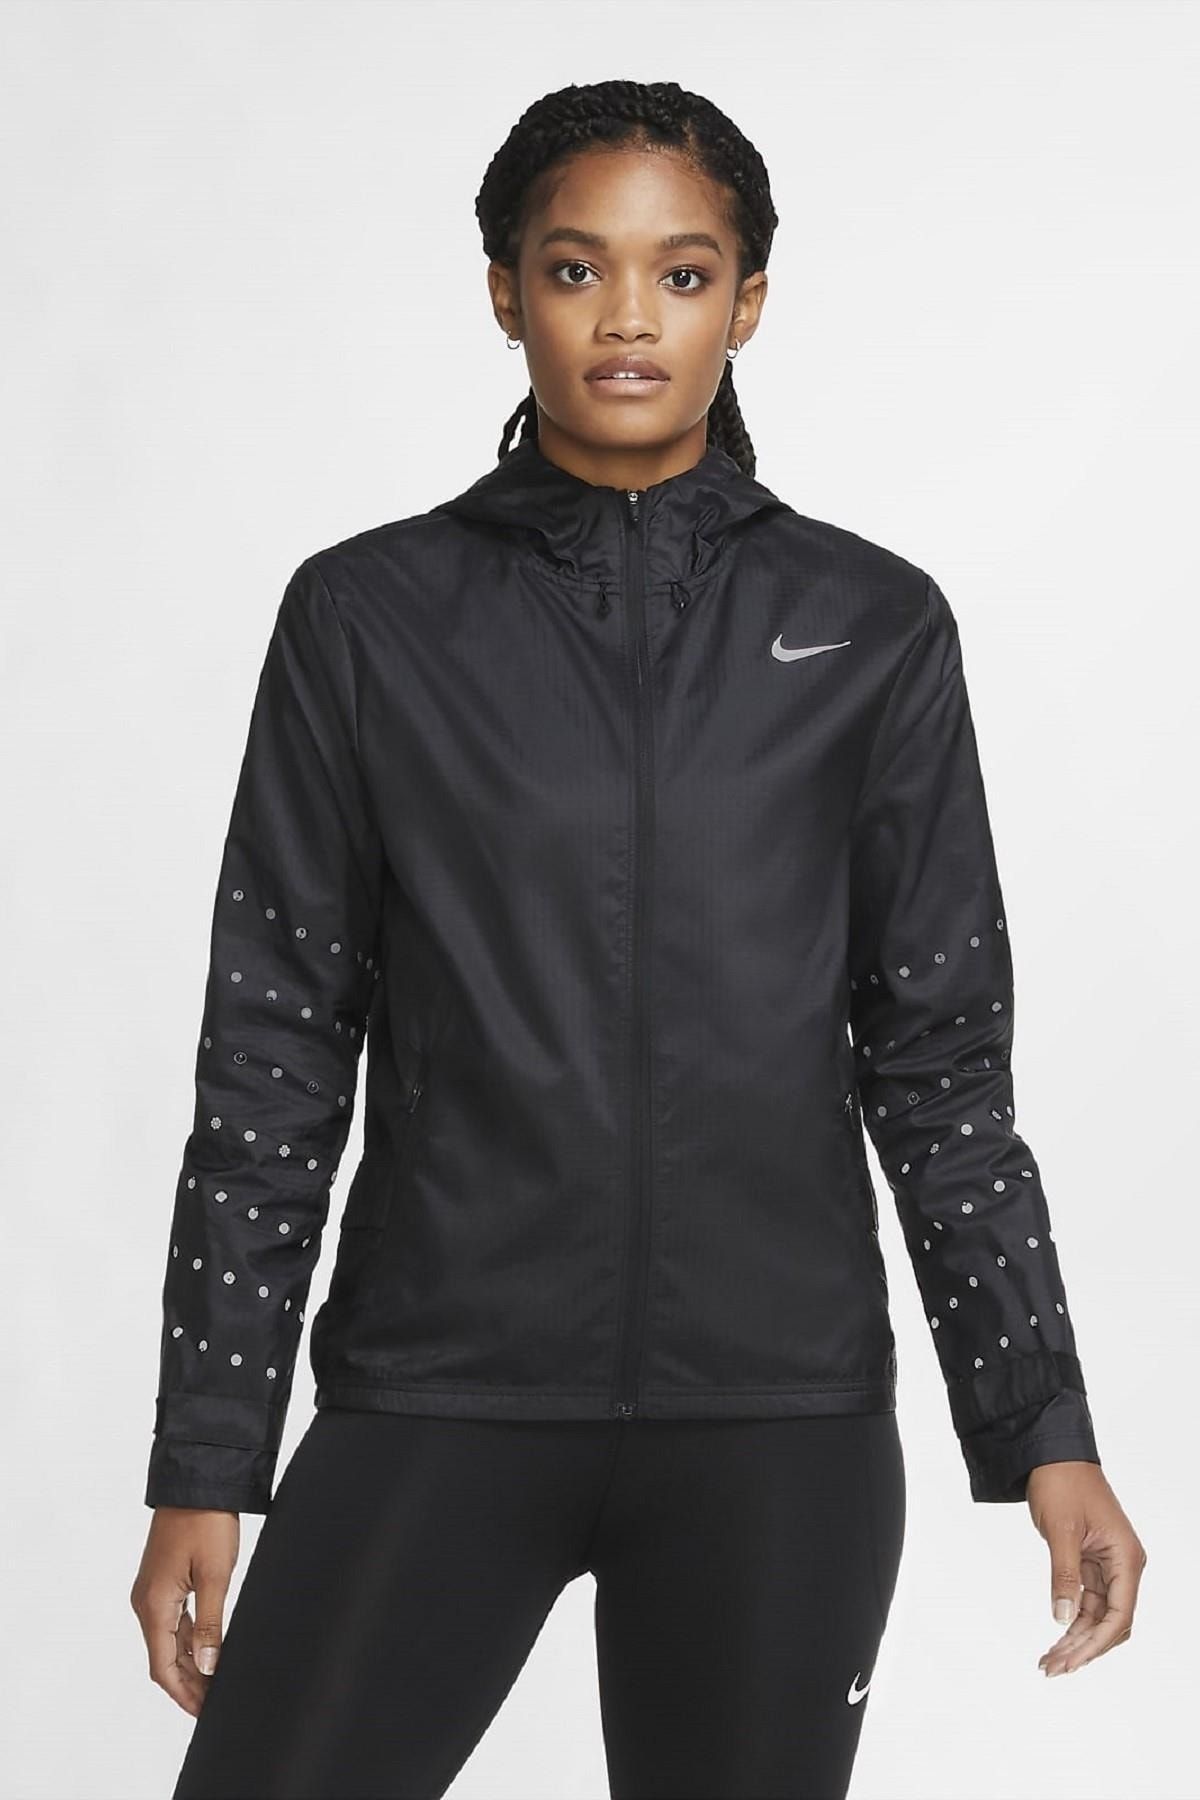 Nike Windrunner Running Full Zip Jacket Reflective Kapüşonlu Kadın Ceket